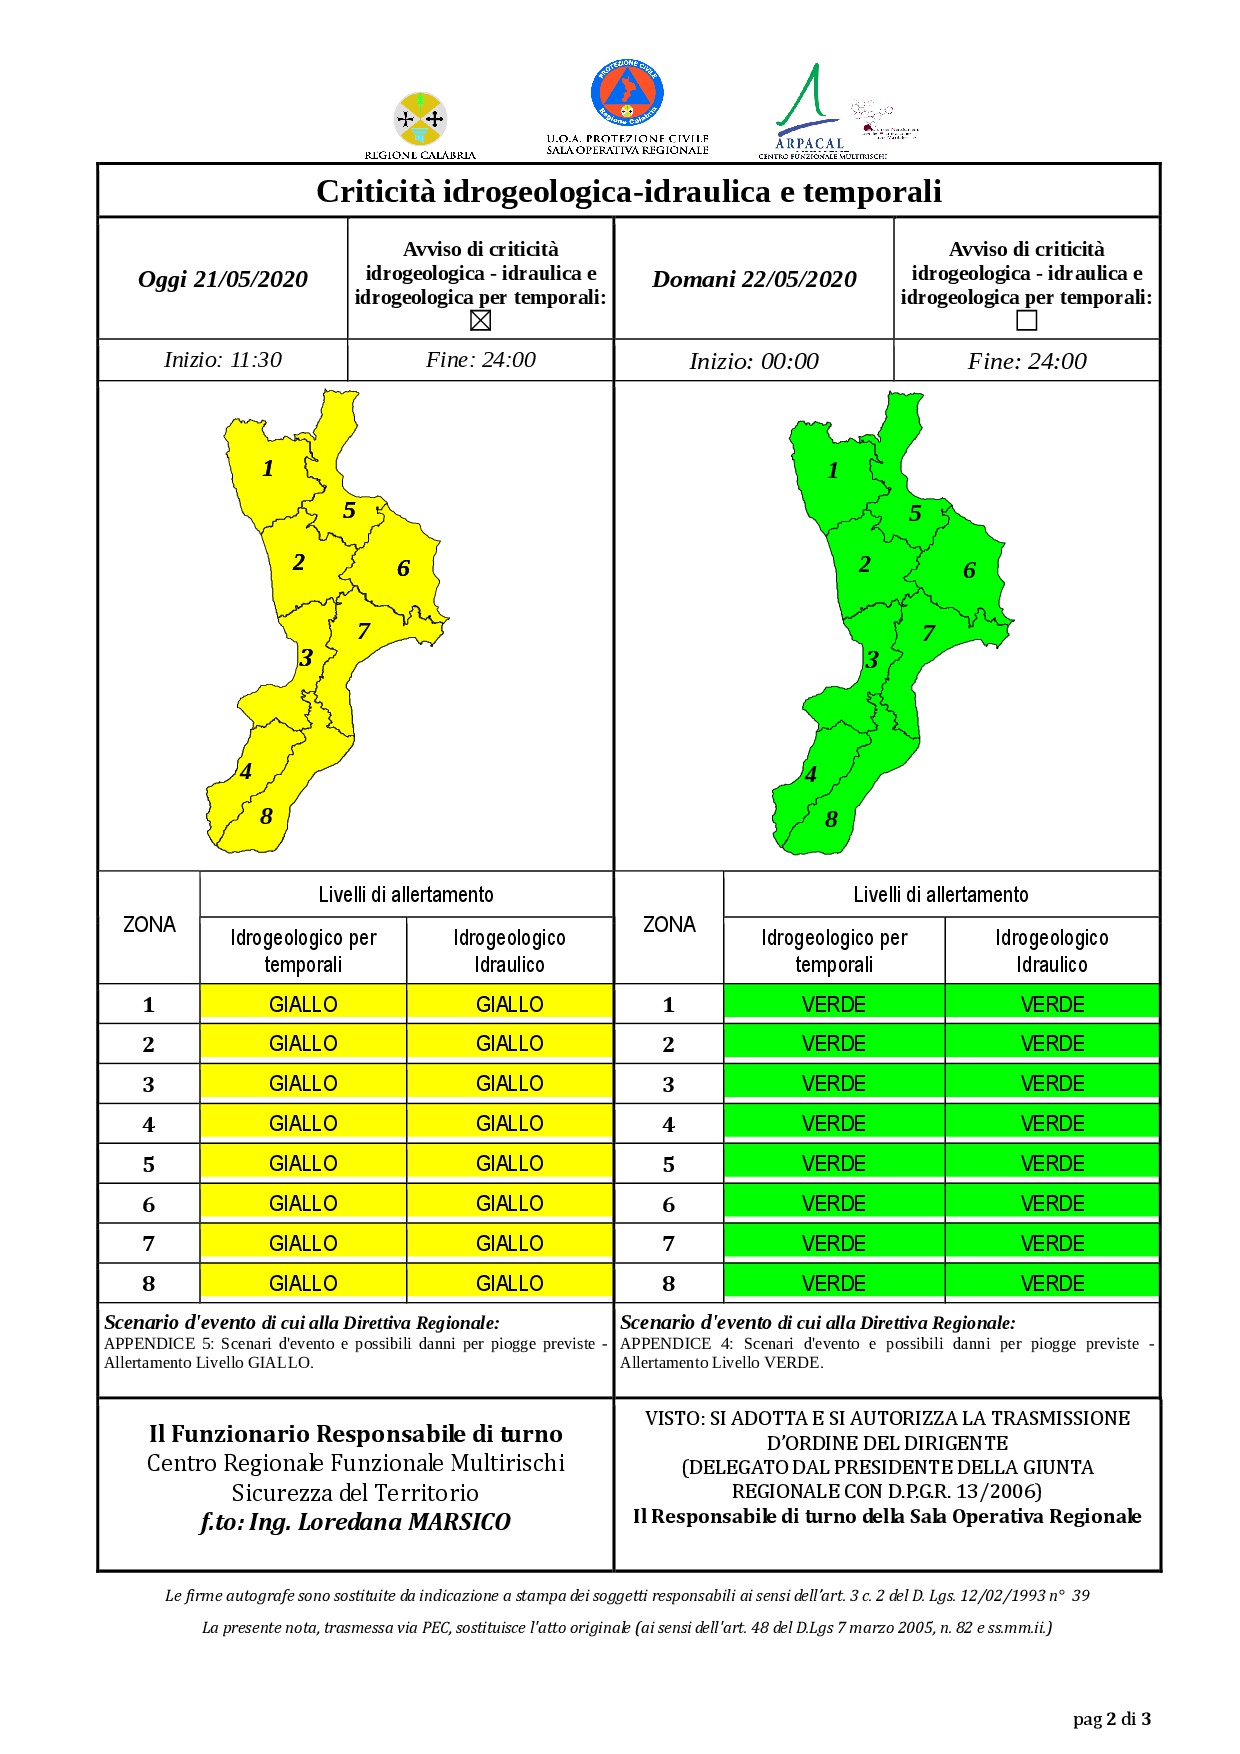 Criticità idrogeologica-idraulica e temporali in Calabria 21-05-2020